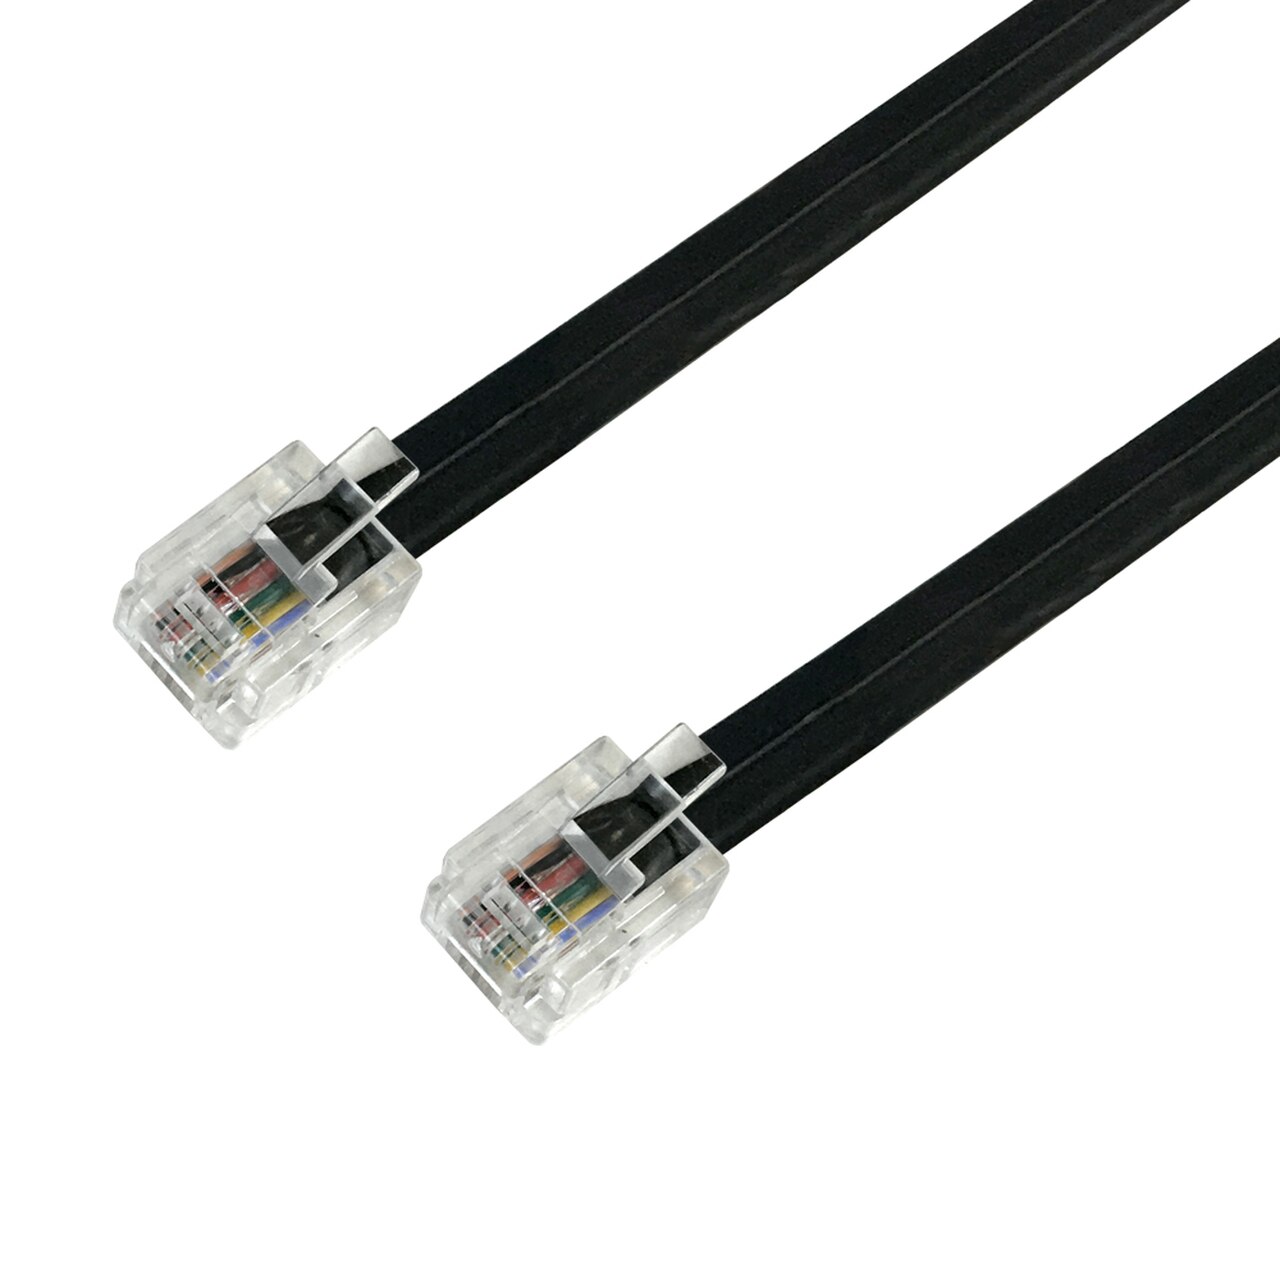 HF-CBK6P6C: 1 to 15 ft RJ12 Modular Data Telephone Cable Straight Through 6P6C - 28AWG - Black